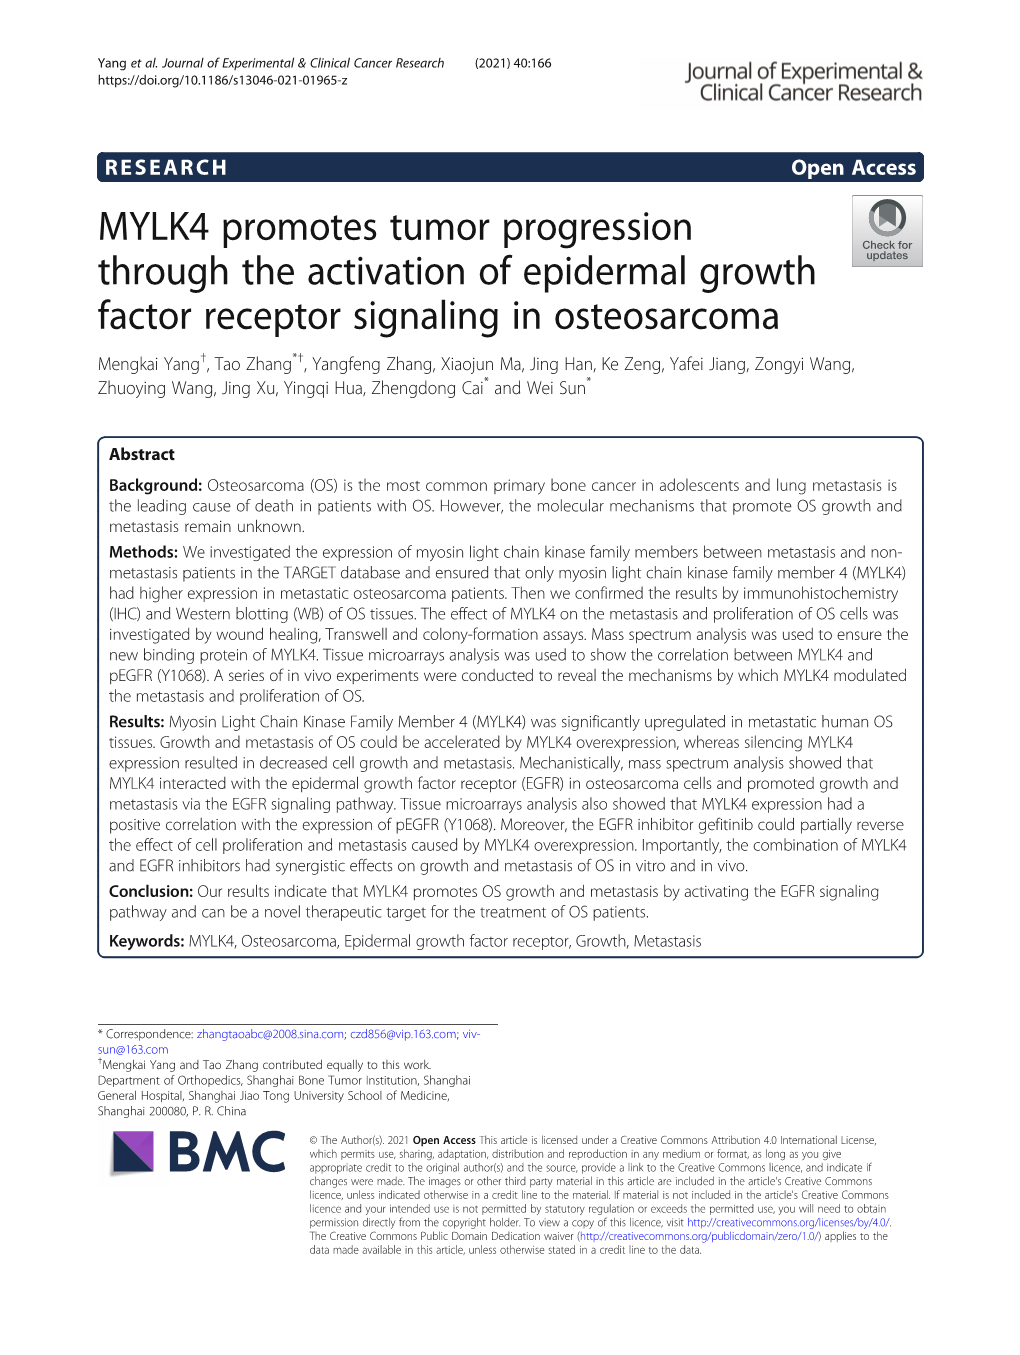 MYLK4 Promotes Tumor Progression Through the Activation of Epidermal